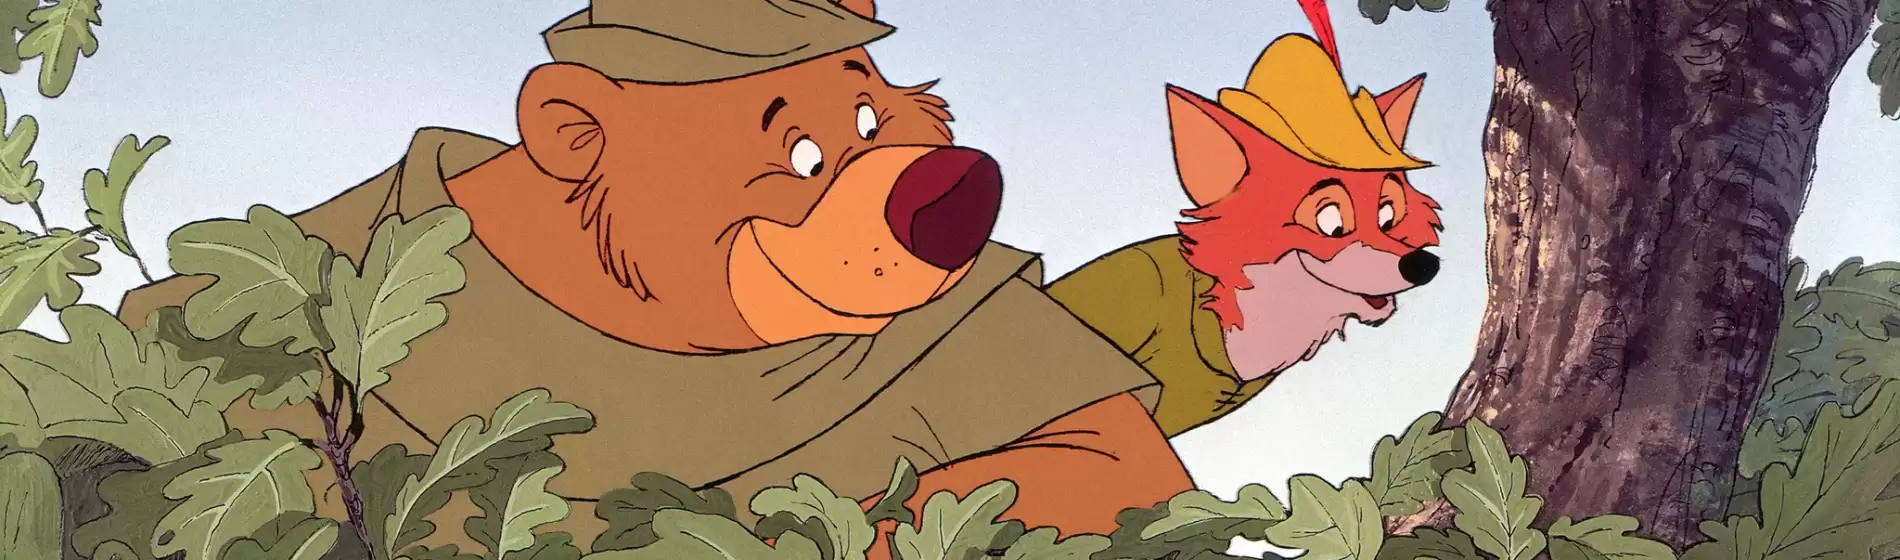 Disney's Robin Hood 1973